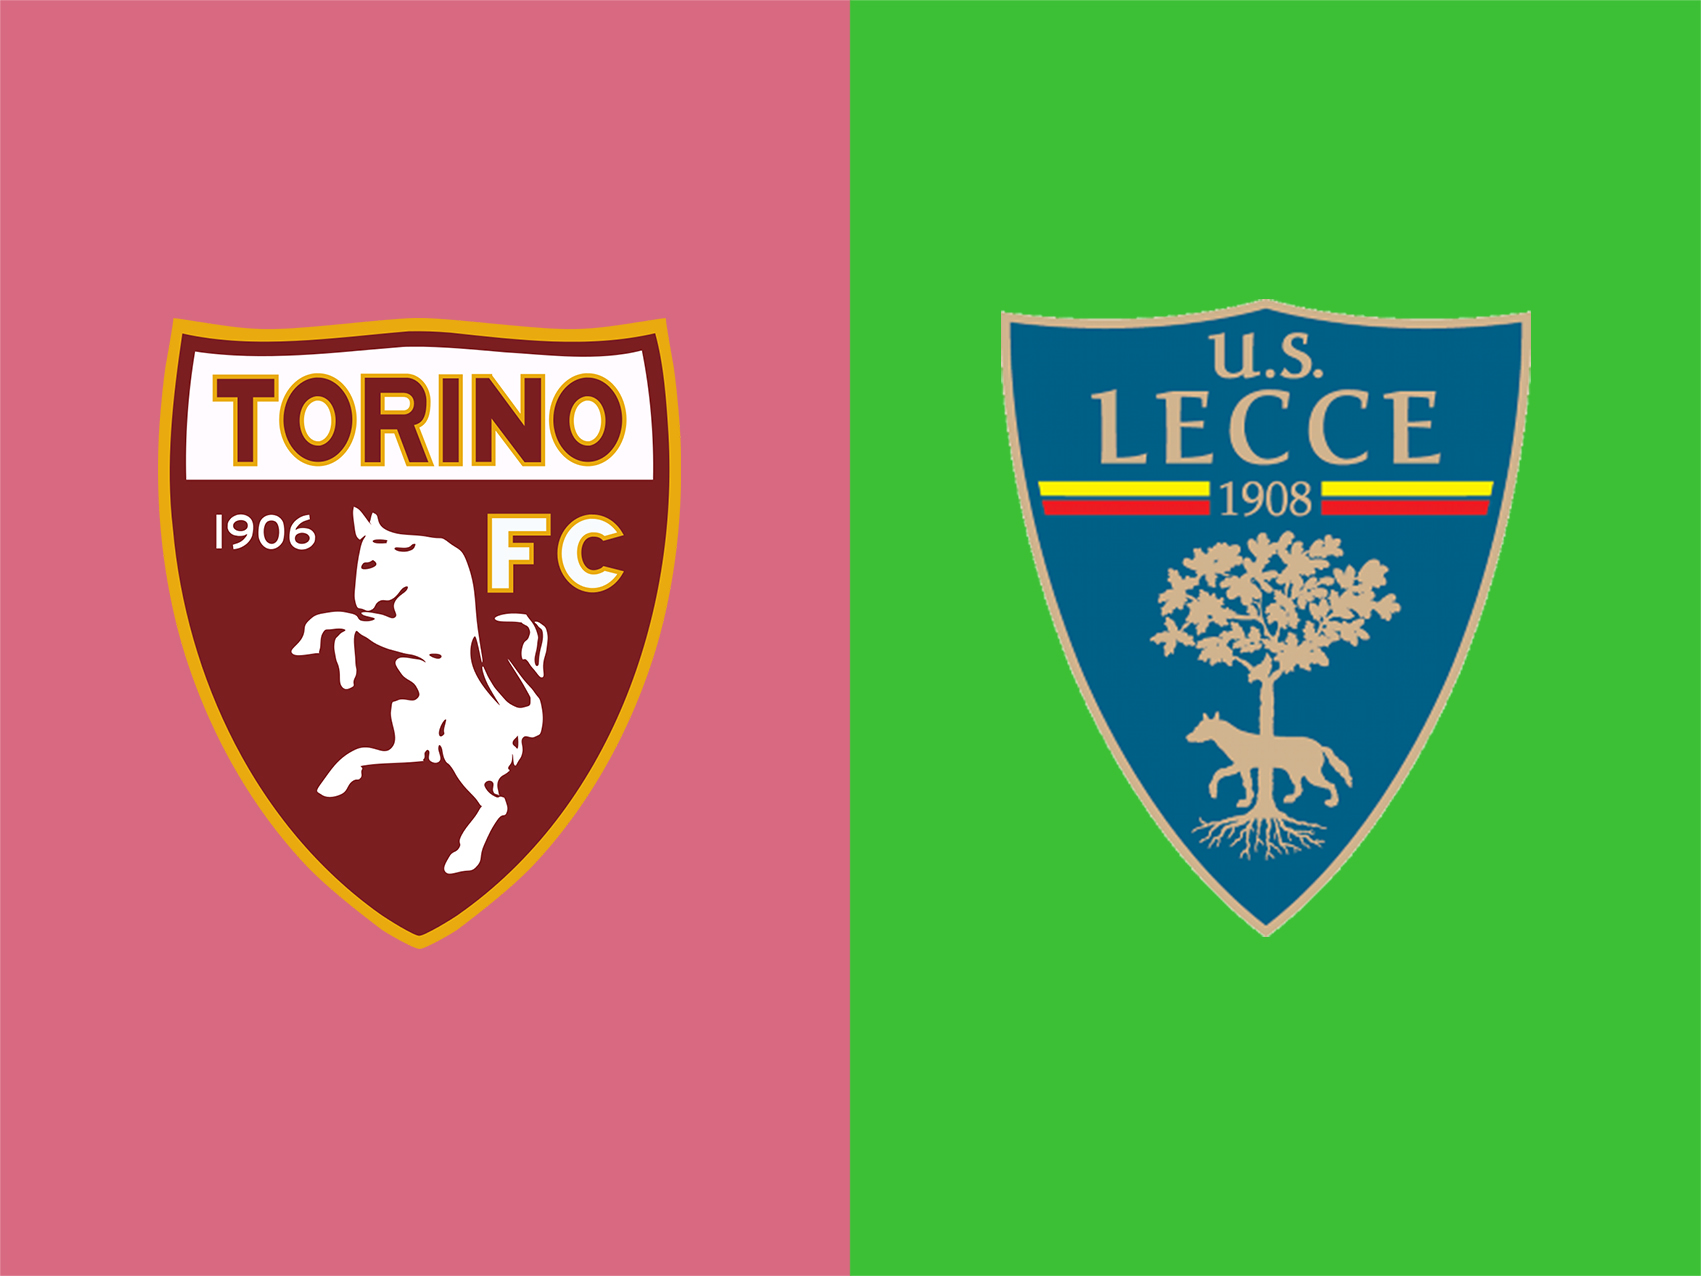 soi-keo-ca-cuoc-bong-da-ngay-14-9-Torino-vs-Lecce-do-it-thang-do-nhieu-b9